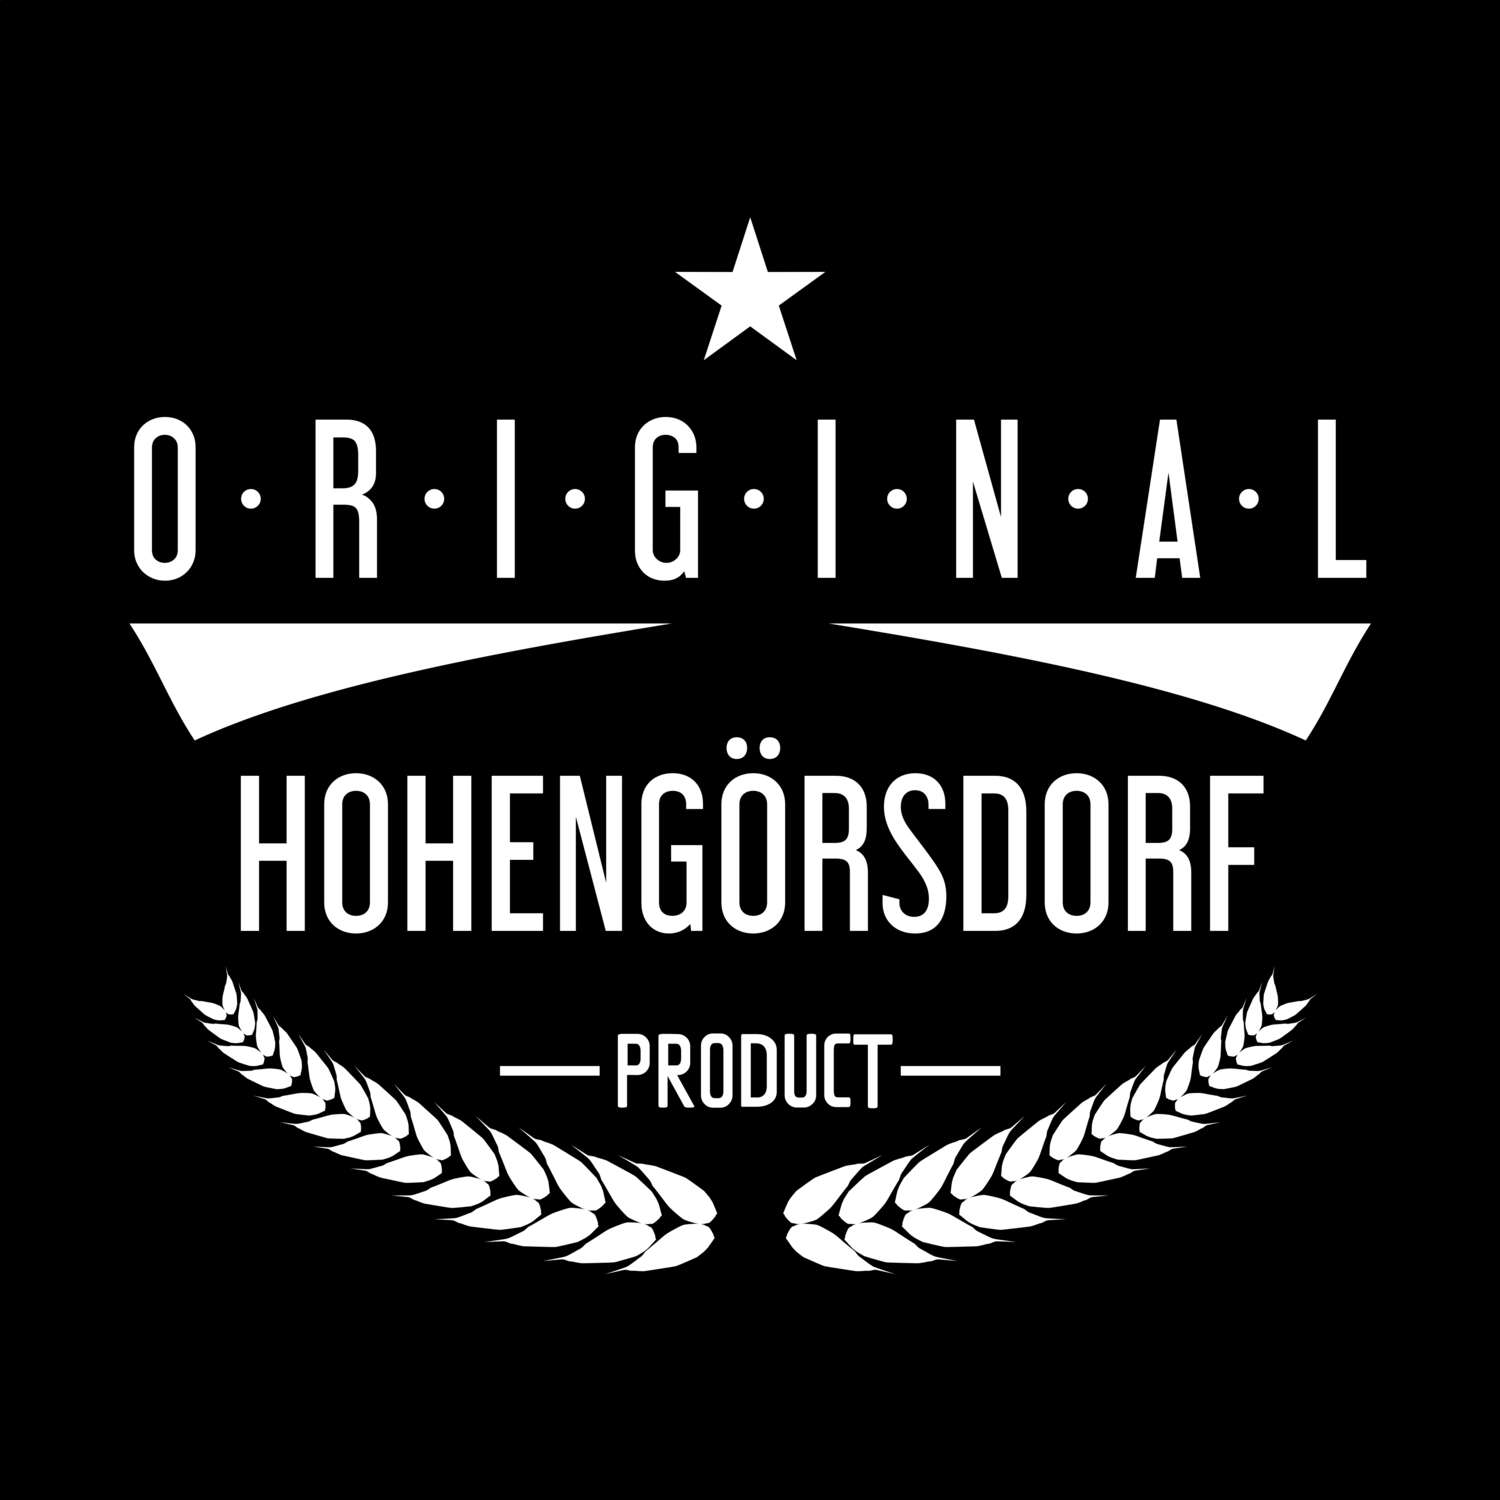 Hohengörsdorf T-Shirt »Original Product«